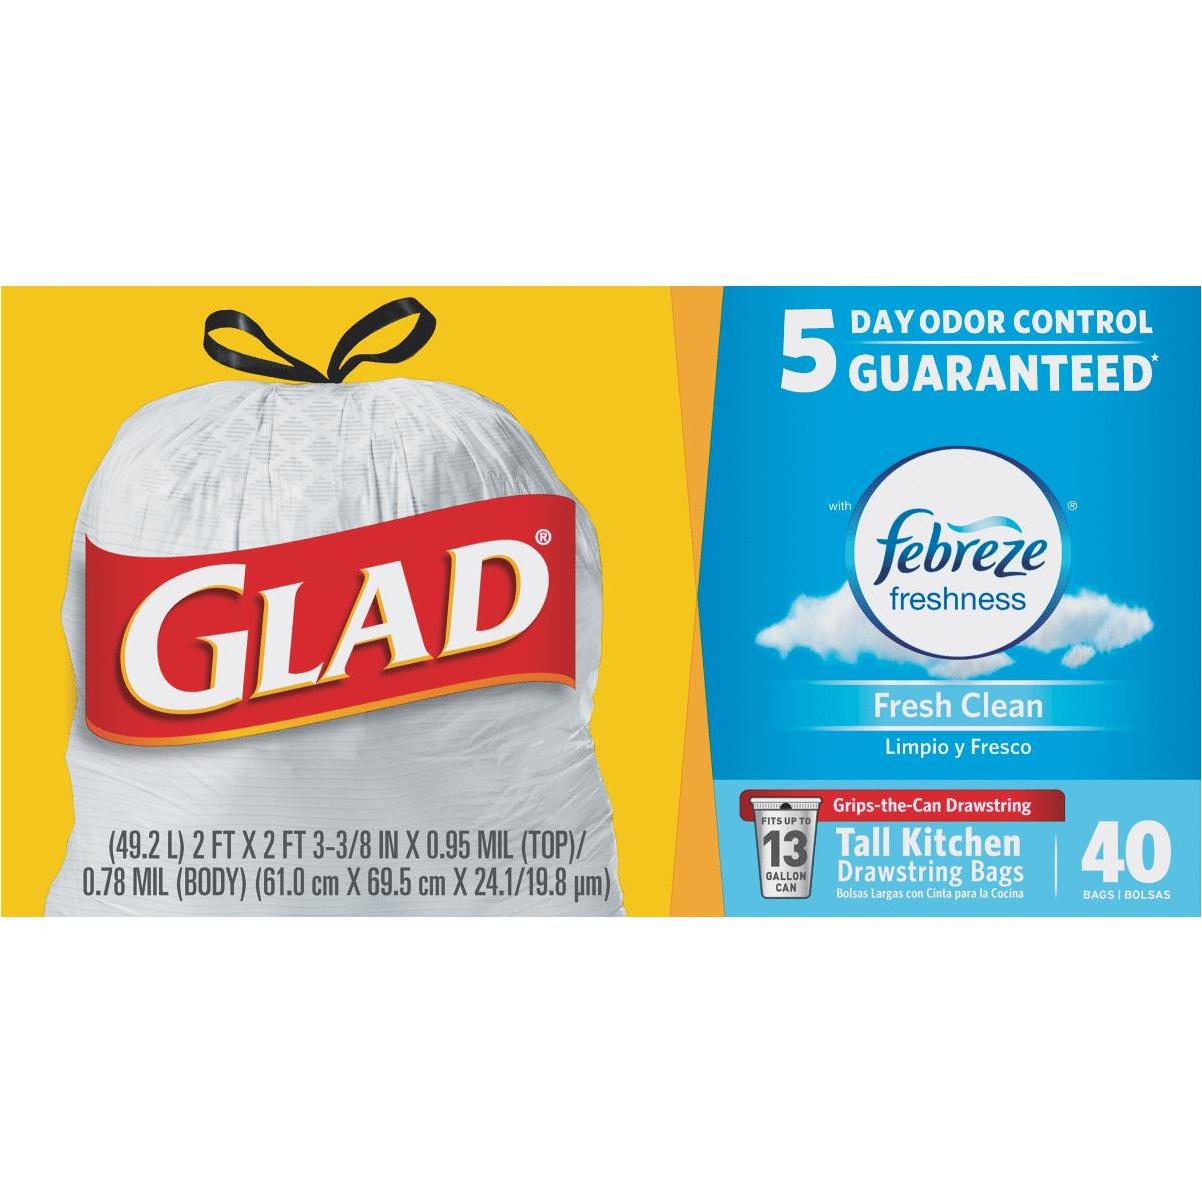 Glad ForceFlex Plus 13 Gal. Tall Kitchen White Trash Bag (40-Count